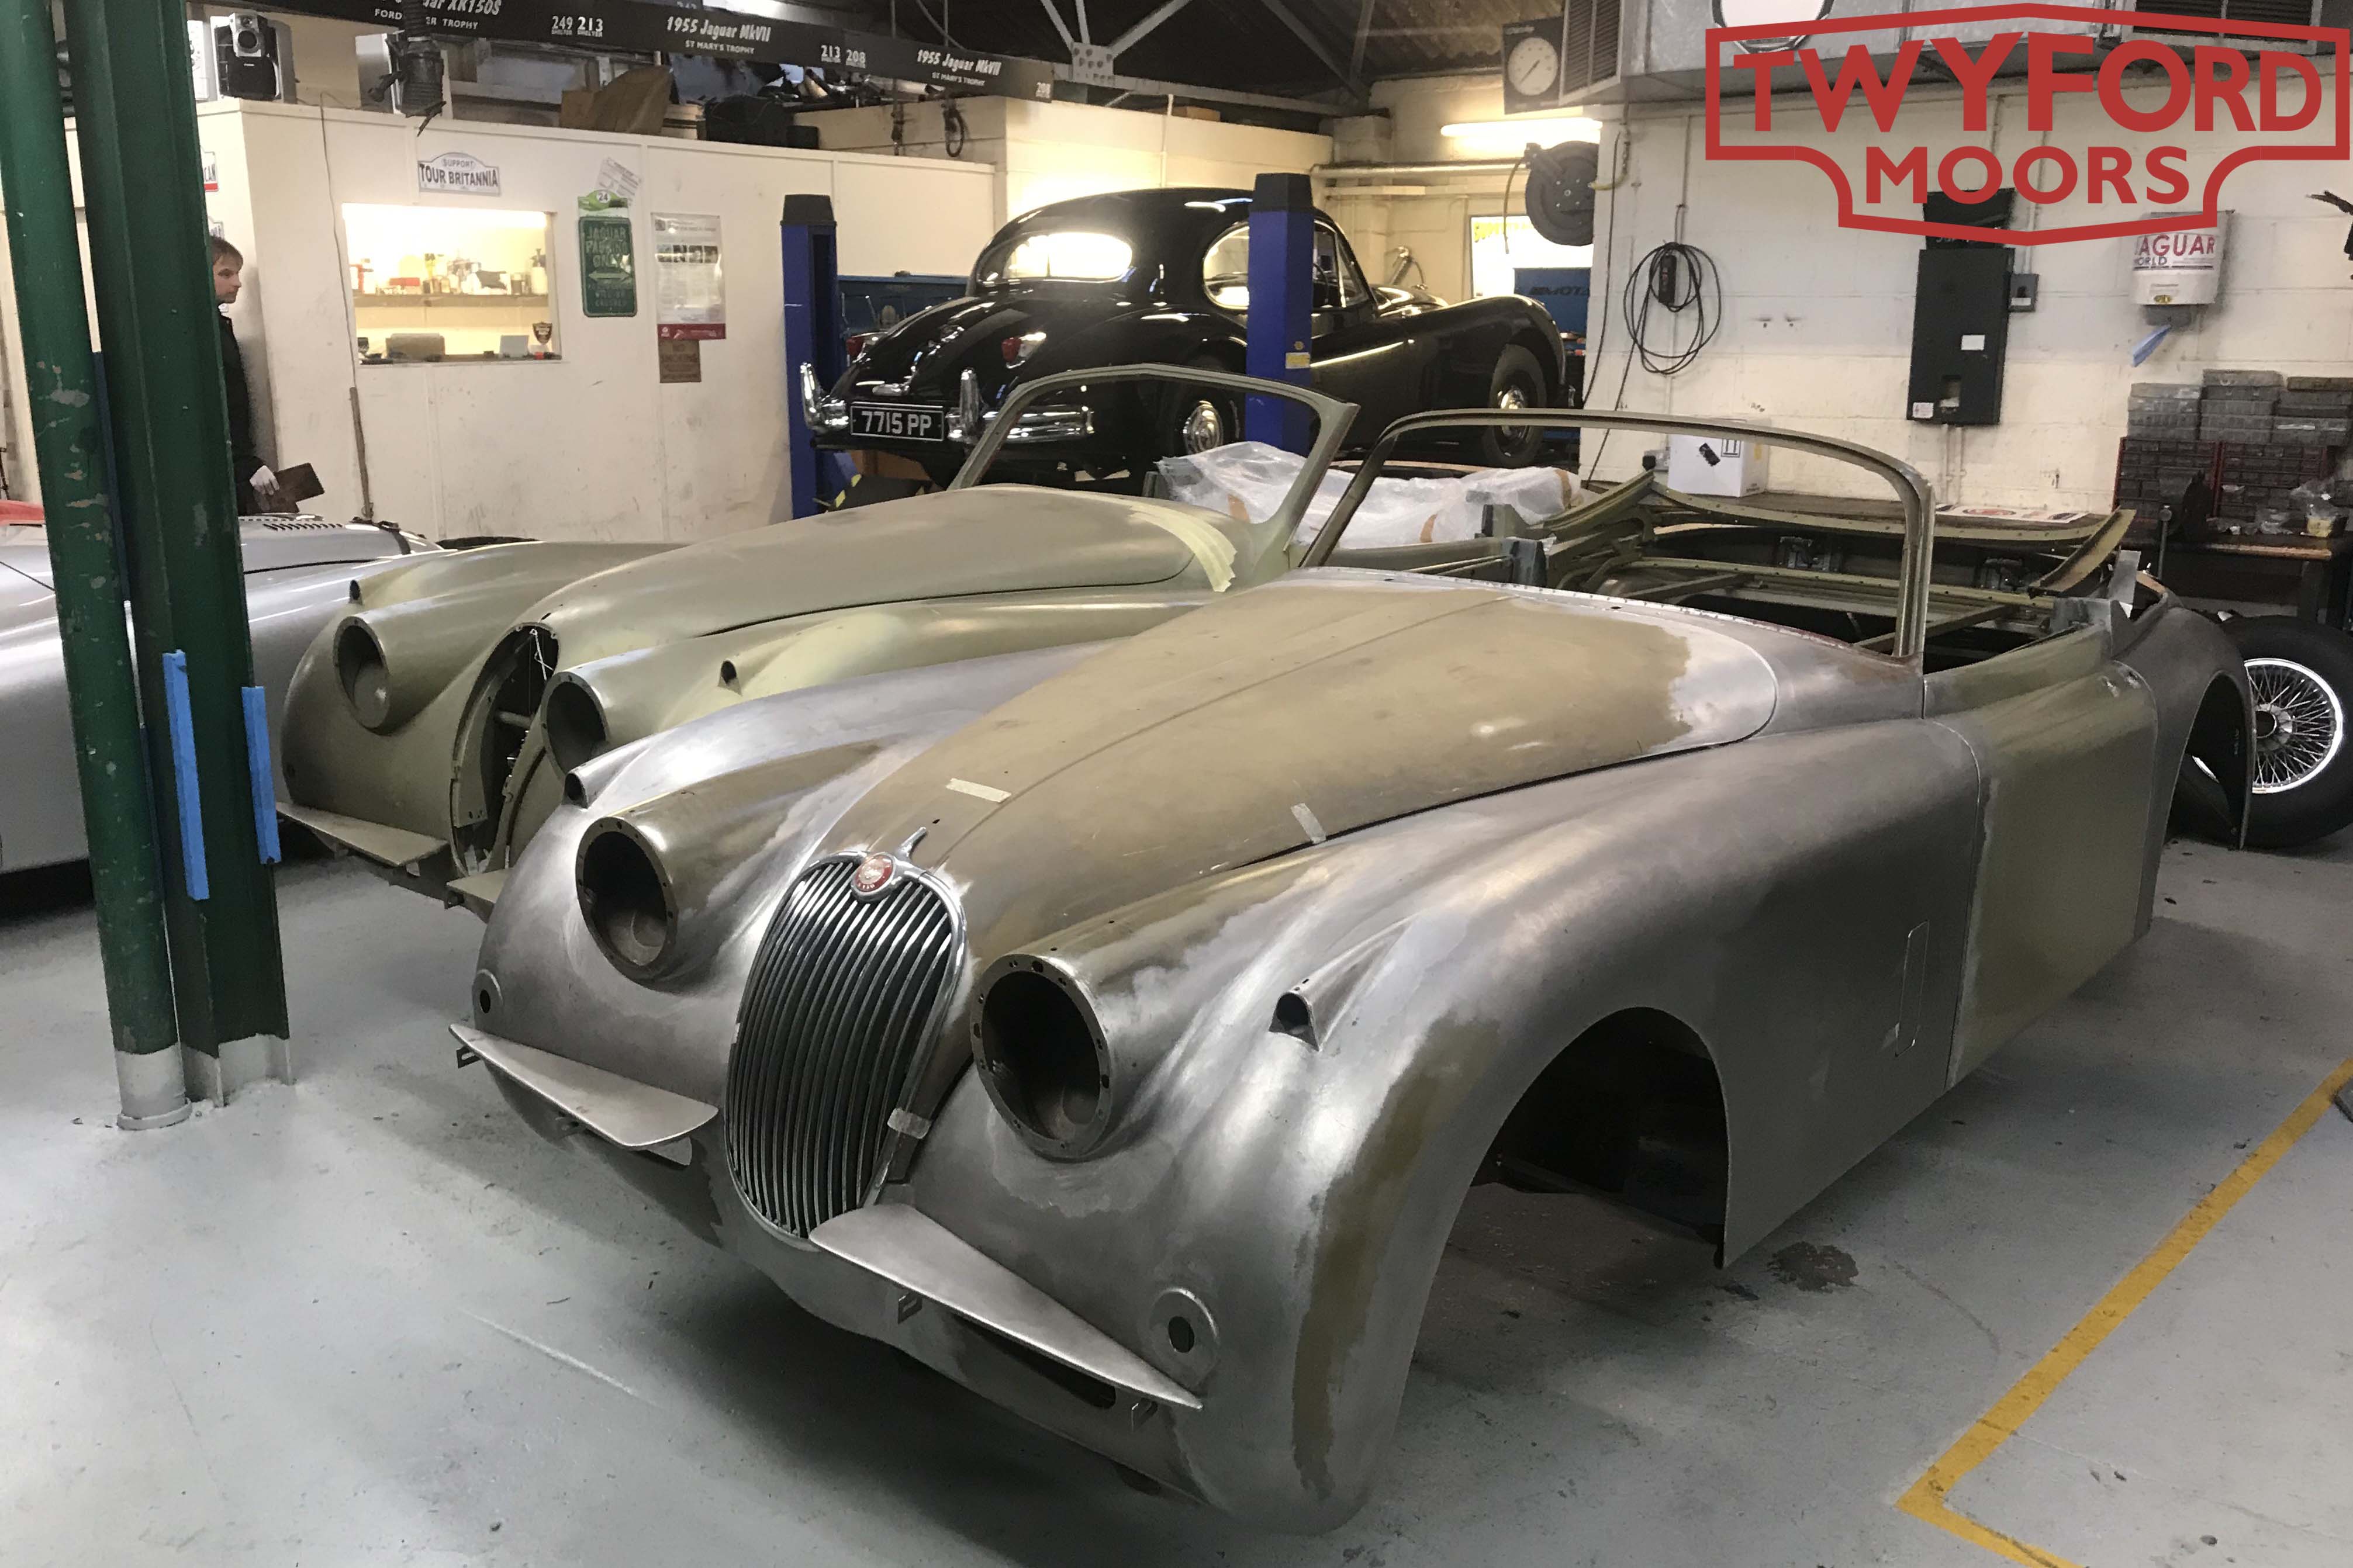 Classic Jaguar restoration